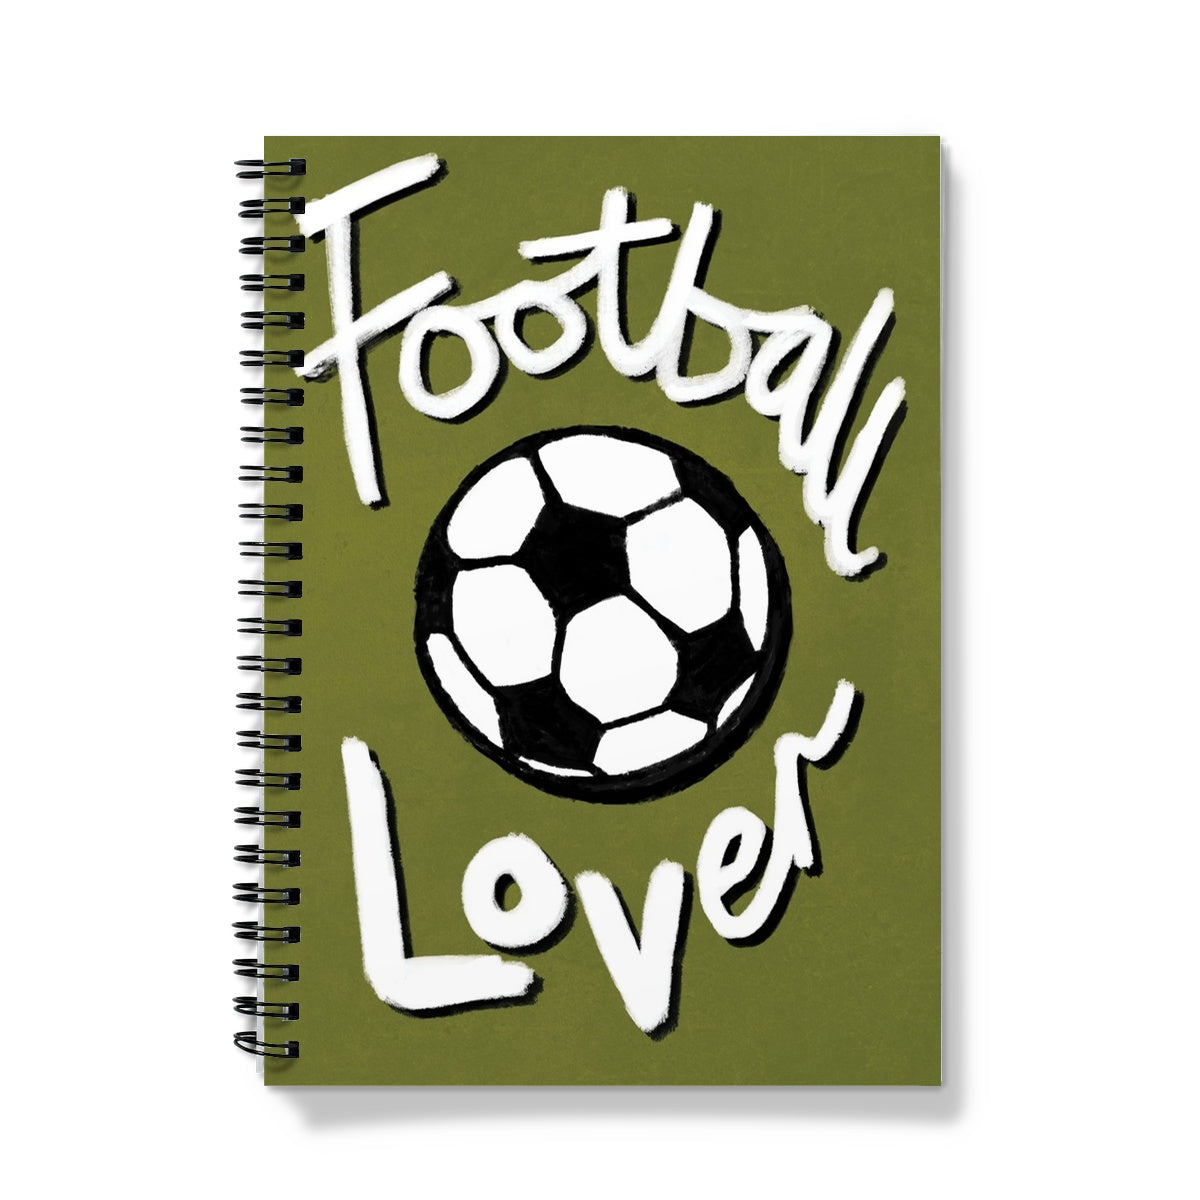 Football Lover Print - Olive Green, Black, White Notebook